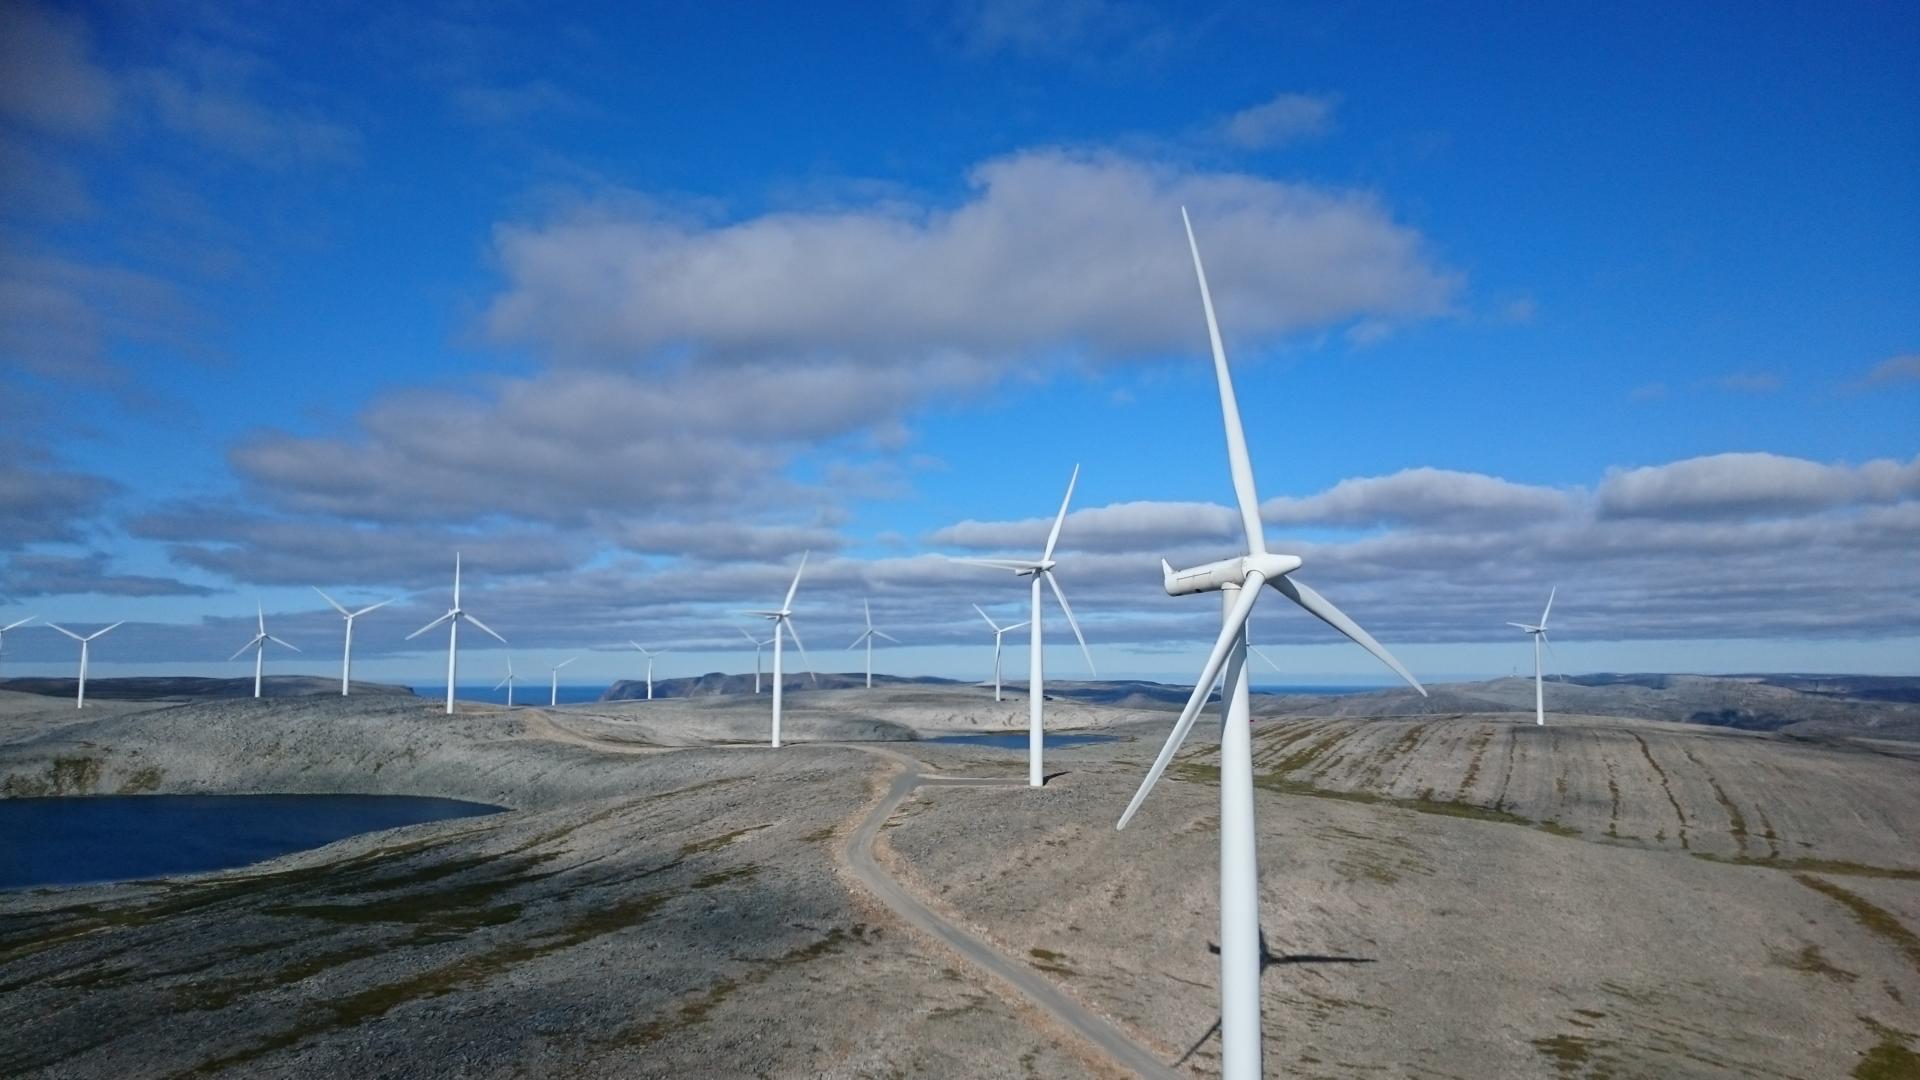 Webinar about wind farm data analysis (in English) – Registration open